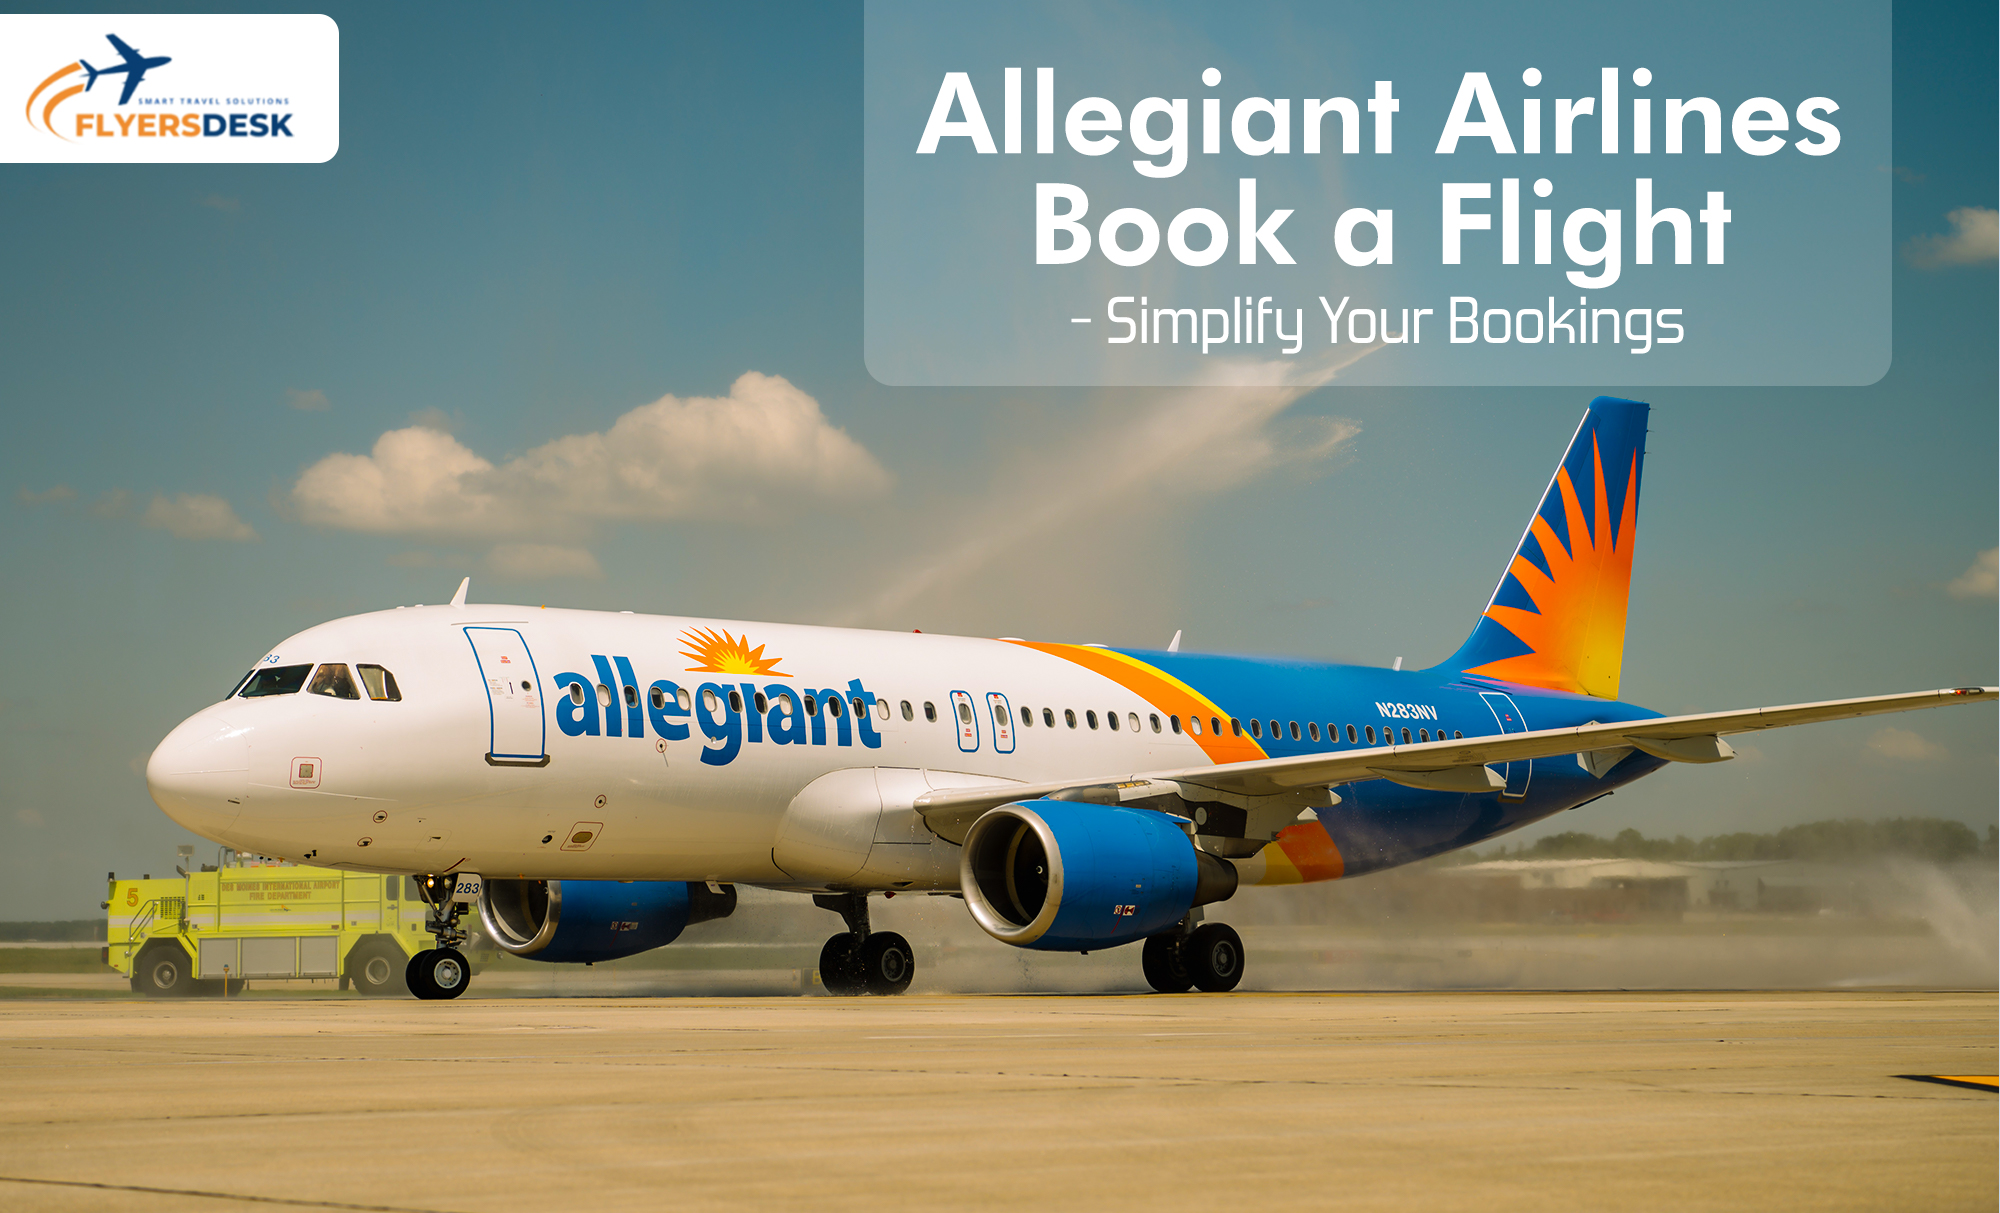 Allegiant Airlines book a flight